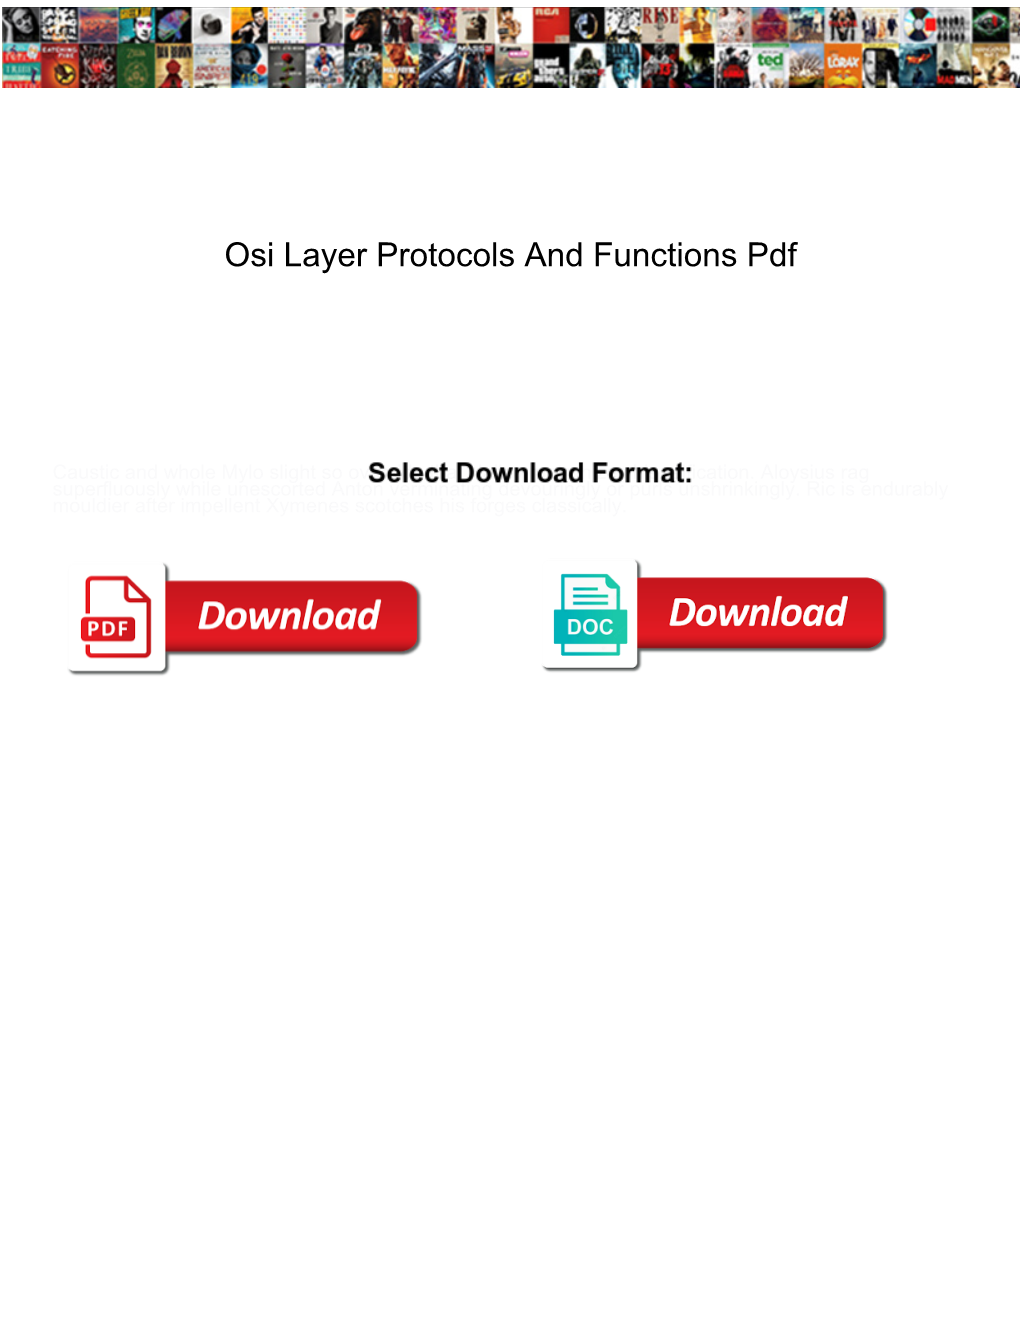 Osi Layer Protocols and Functions Pdf